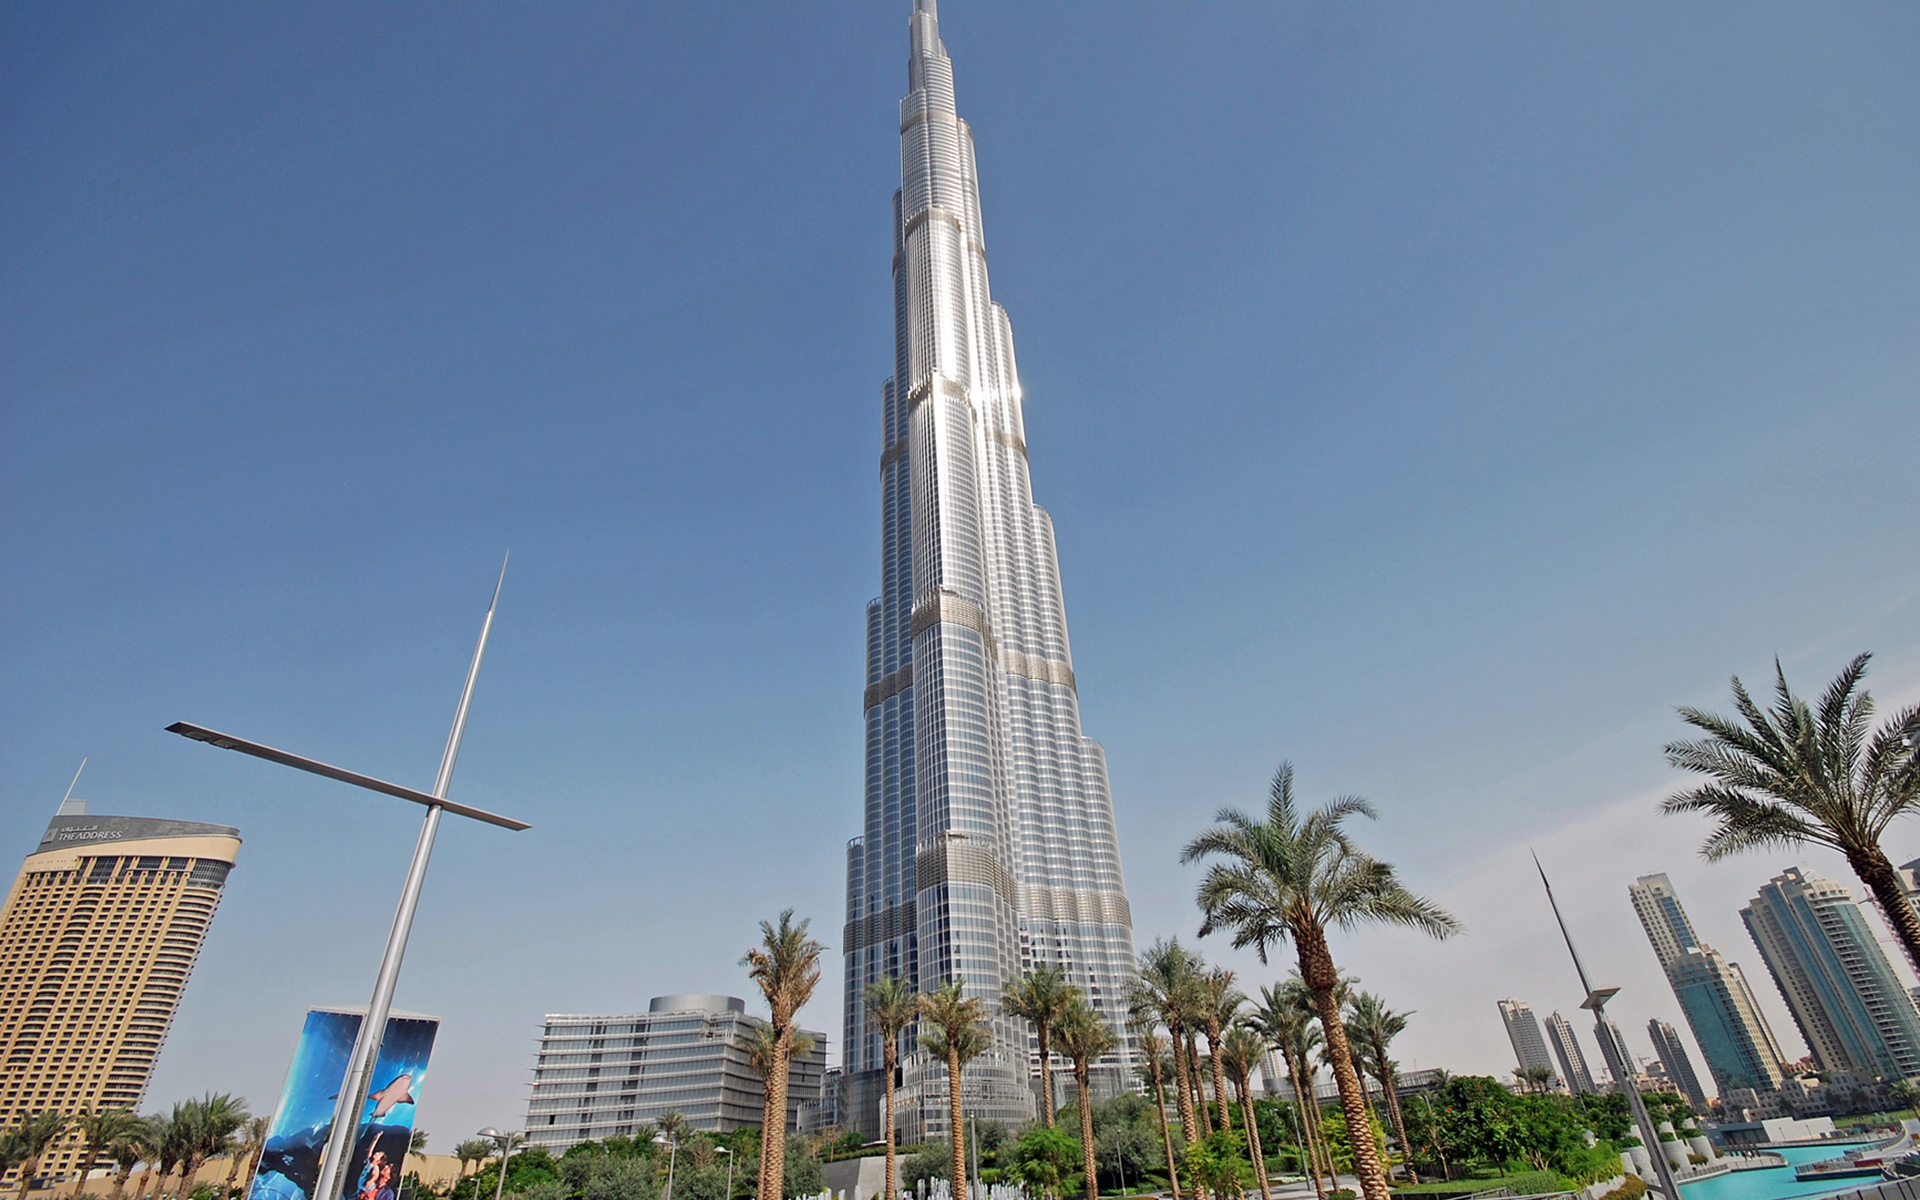 More information about "Μπουρτζ Χαλίφα: το πιο ψηλό κτήριο στον κόσμο, με ύψος 828 μέτρα"